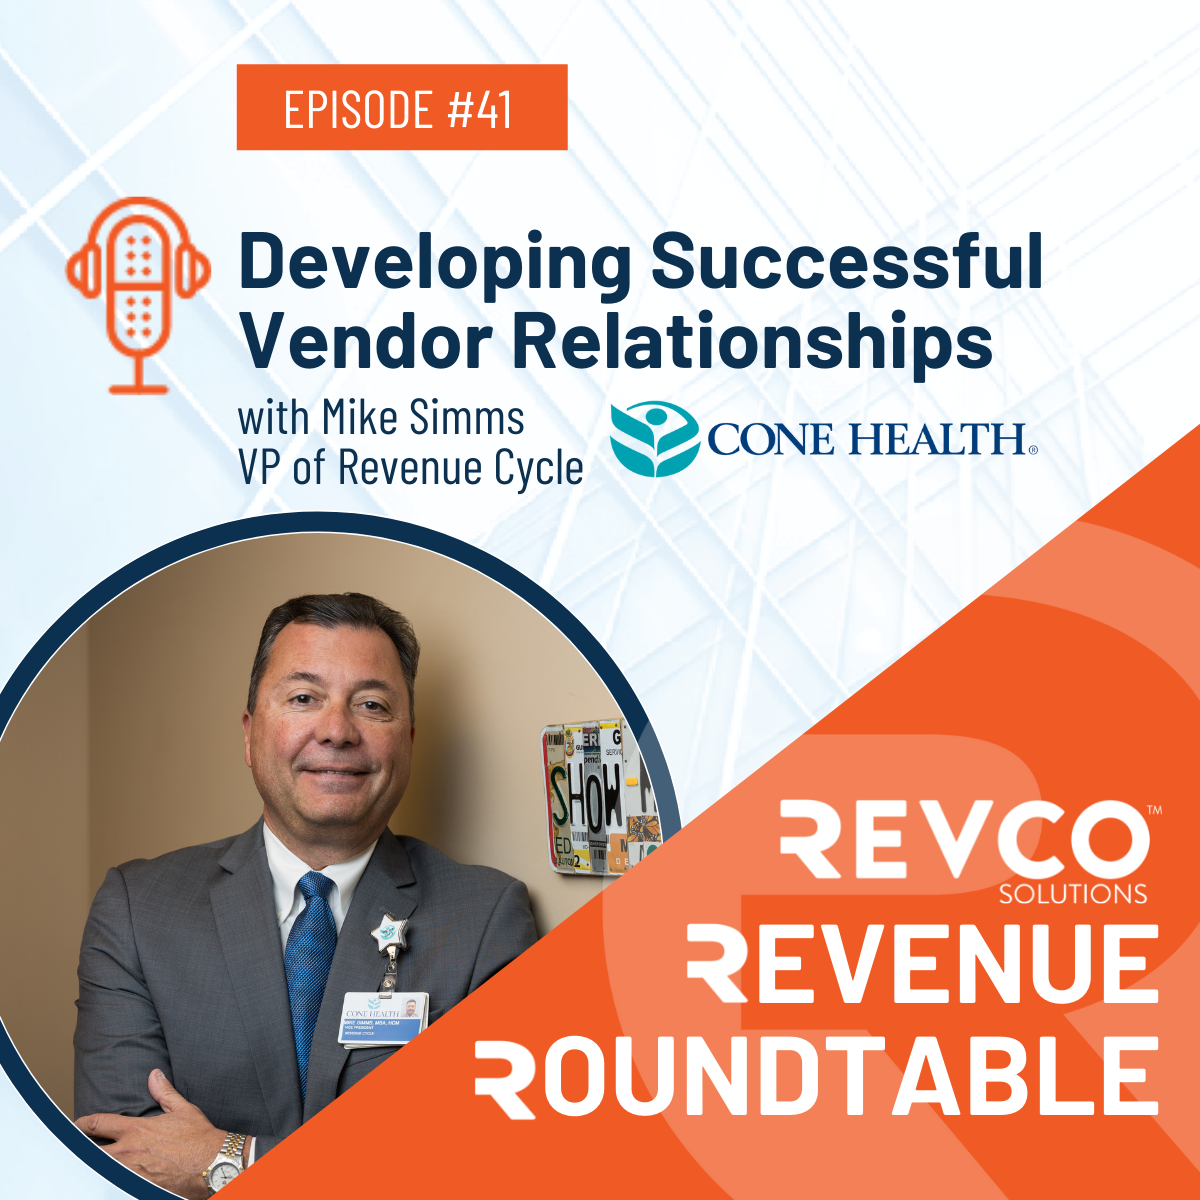 Revenue Roundtable Podcast Episode 41 - Developing Successful Vendor Relationships